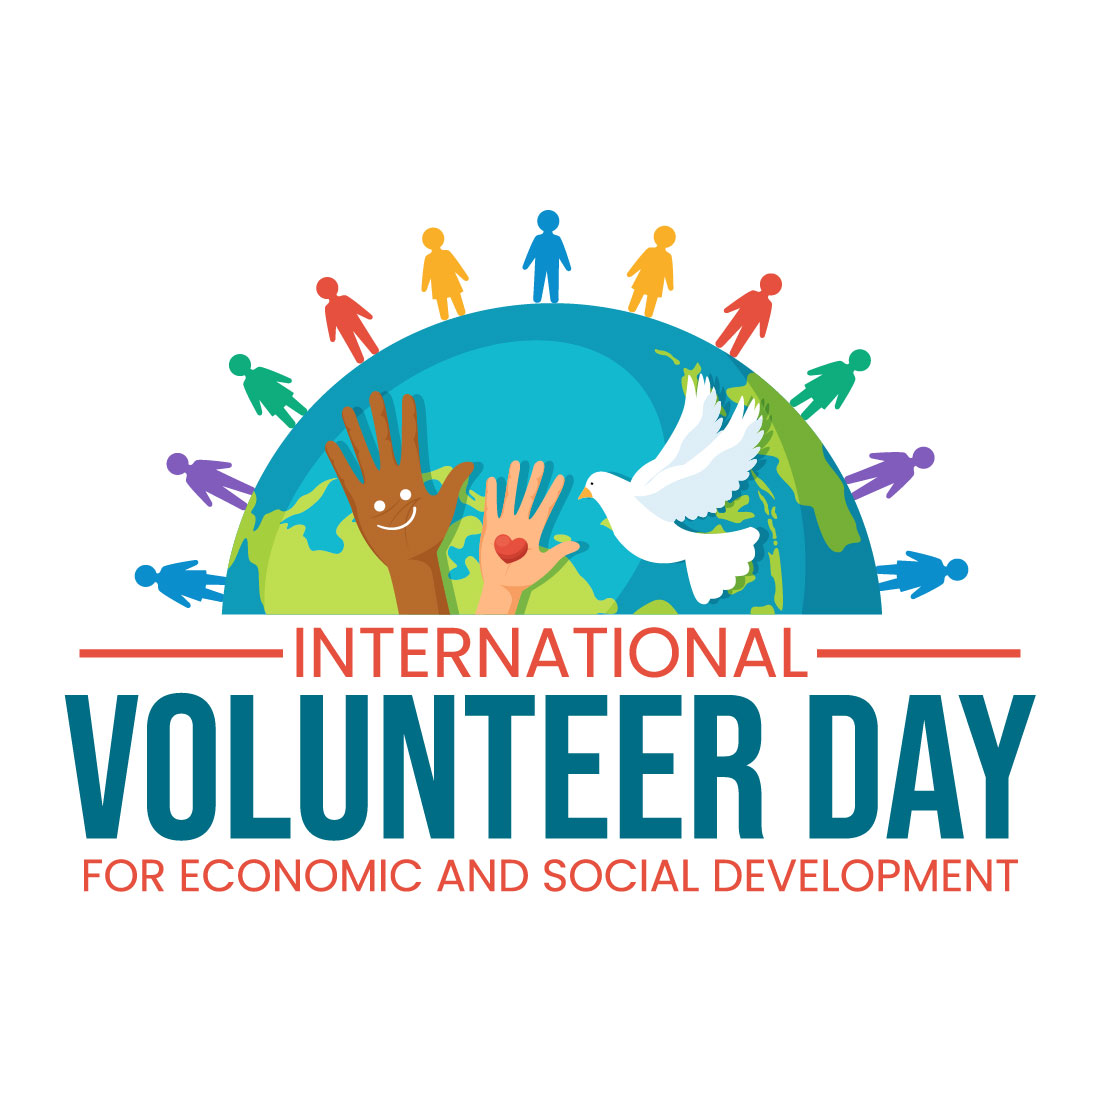 12 International Volunteer Day Illustration preview image.